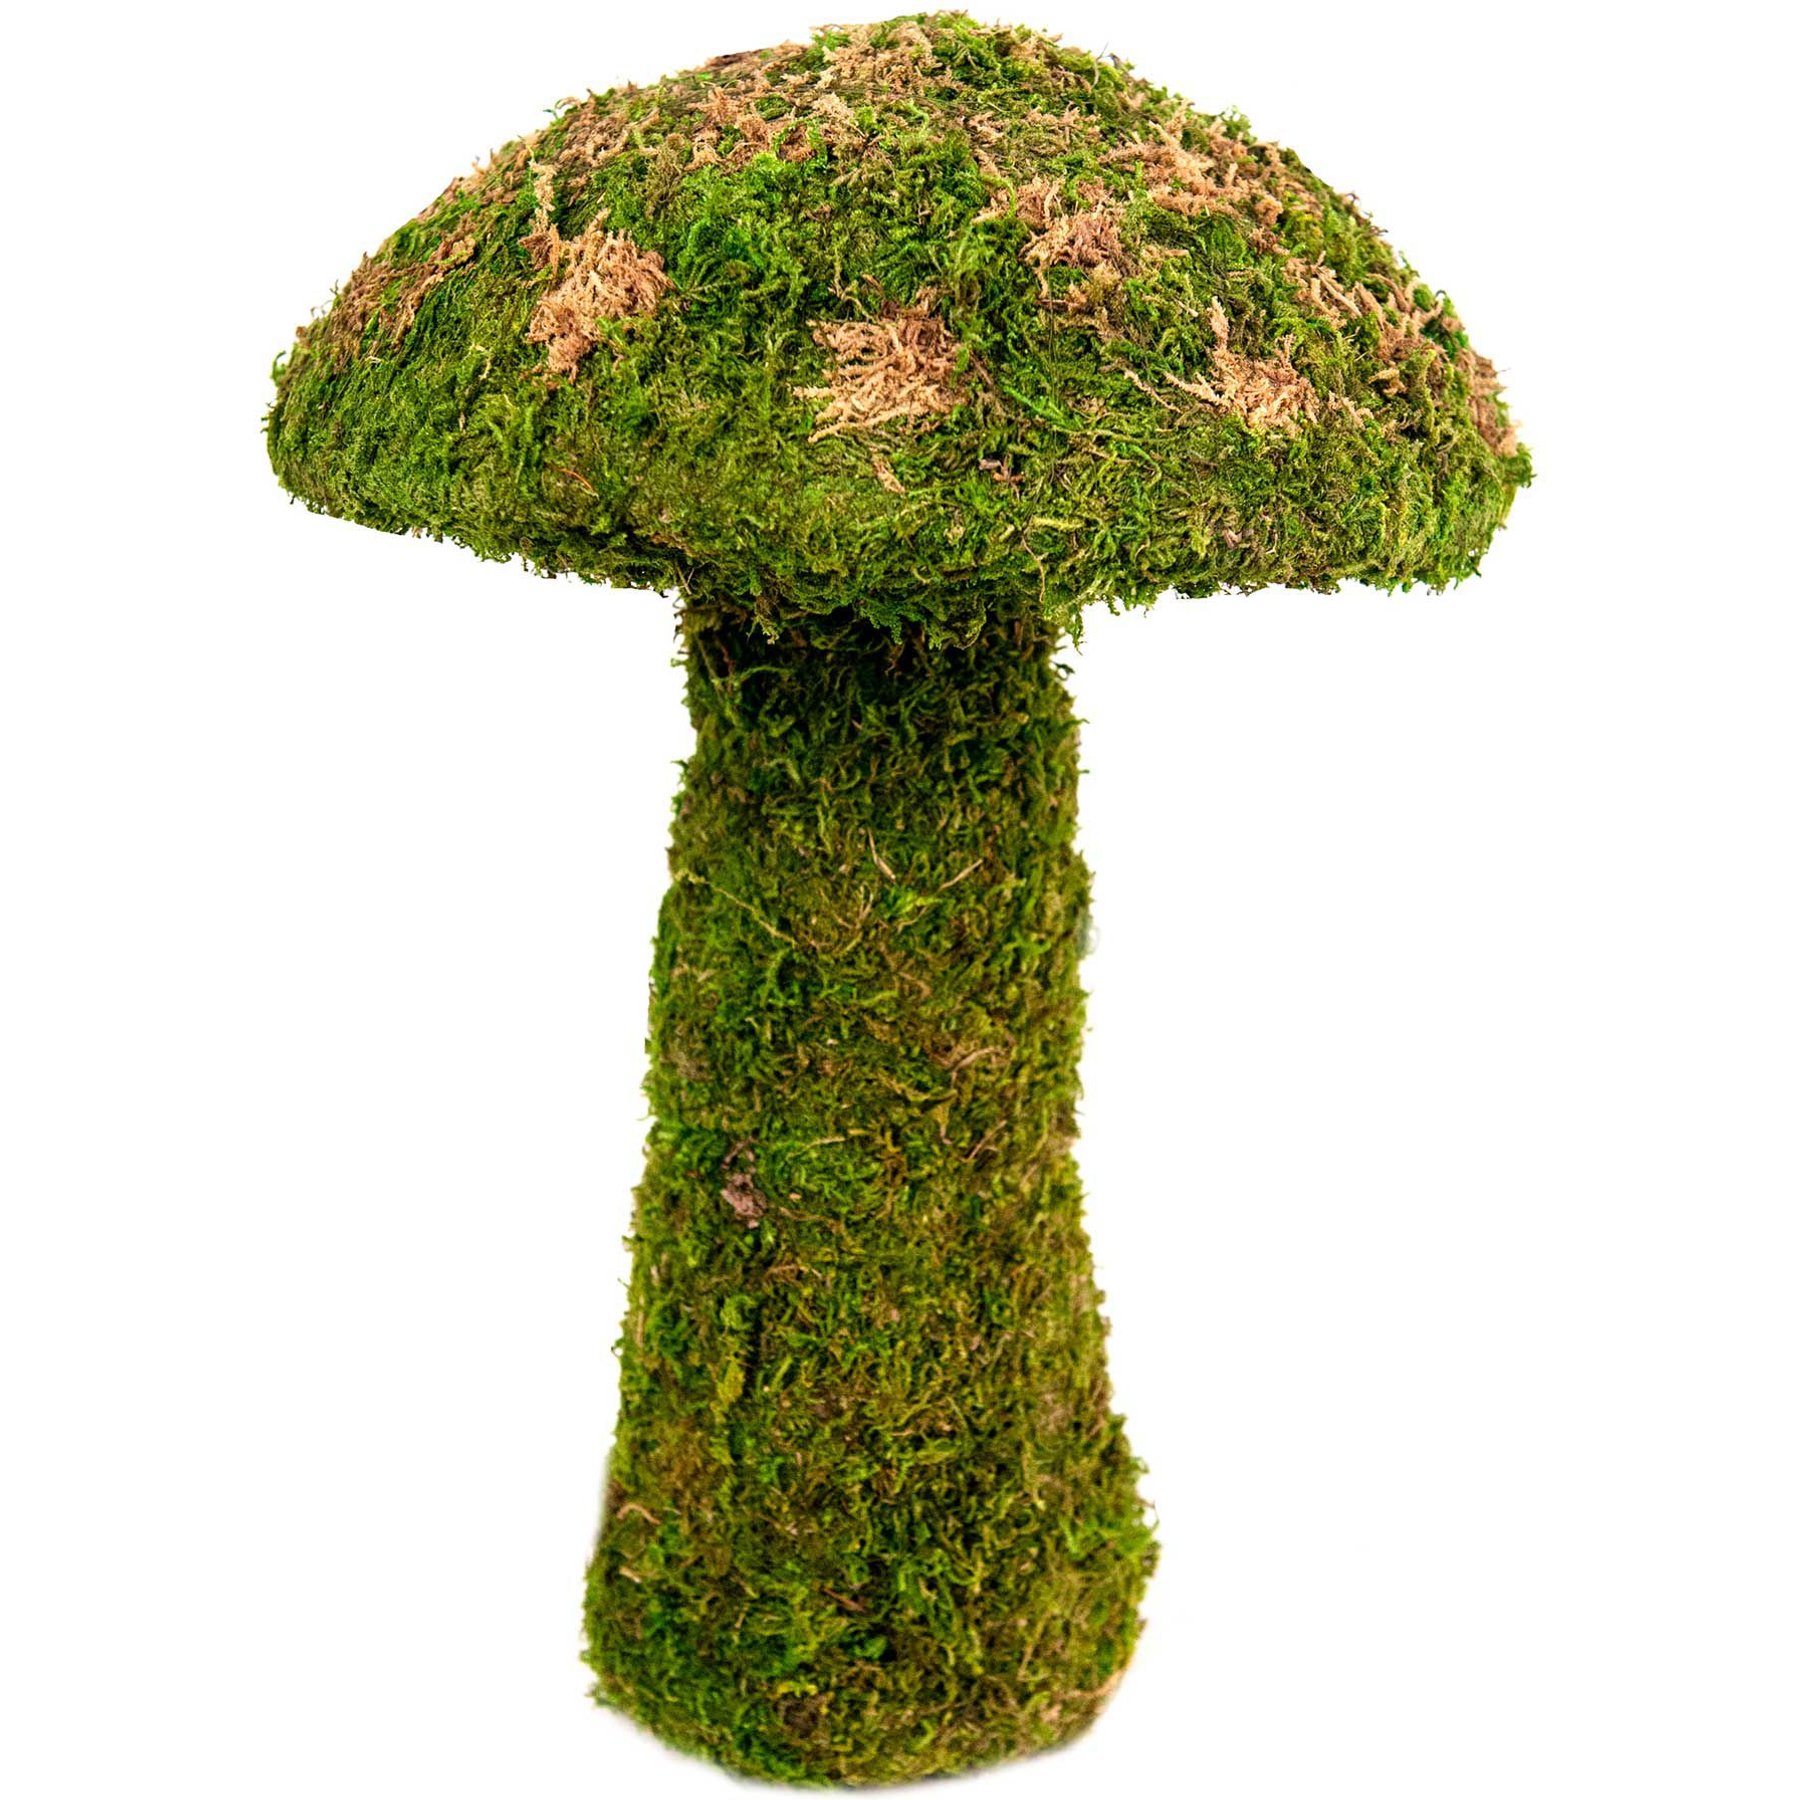 Northlight 33377621 6.5 in. Artificial Moss Covered Mushroom